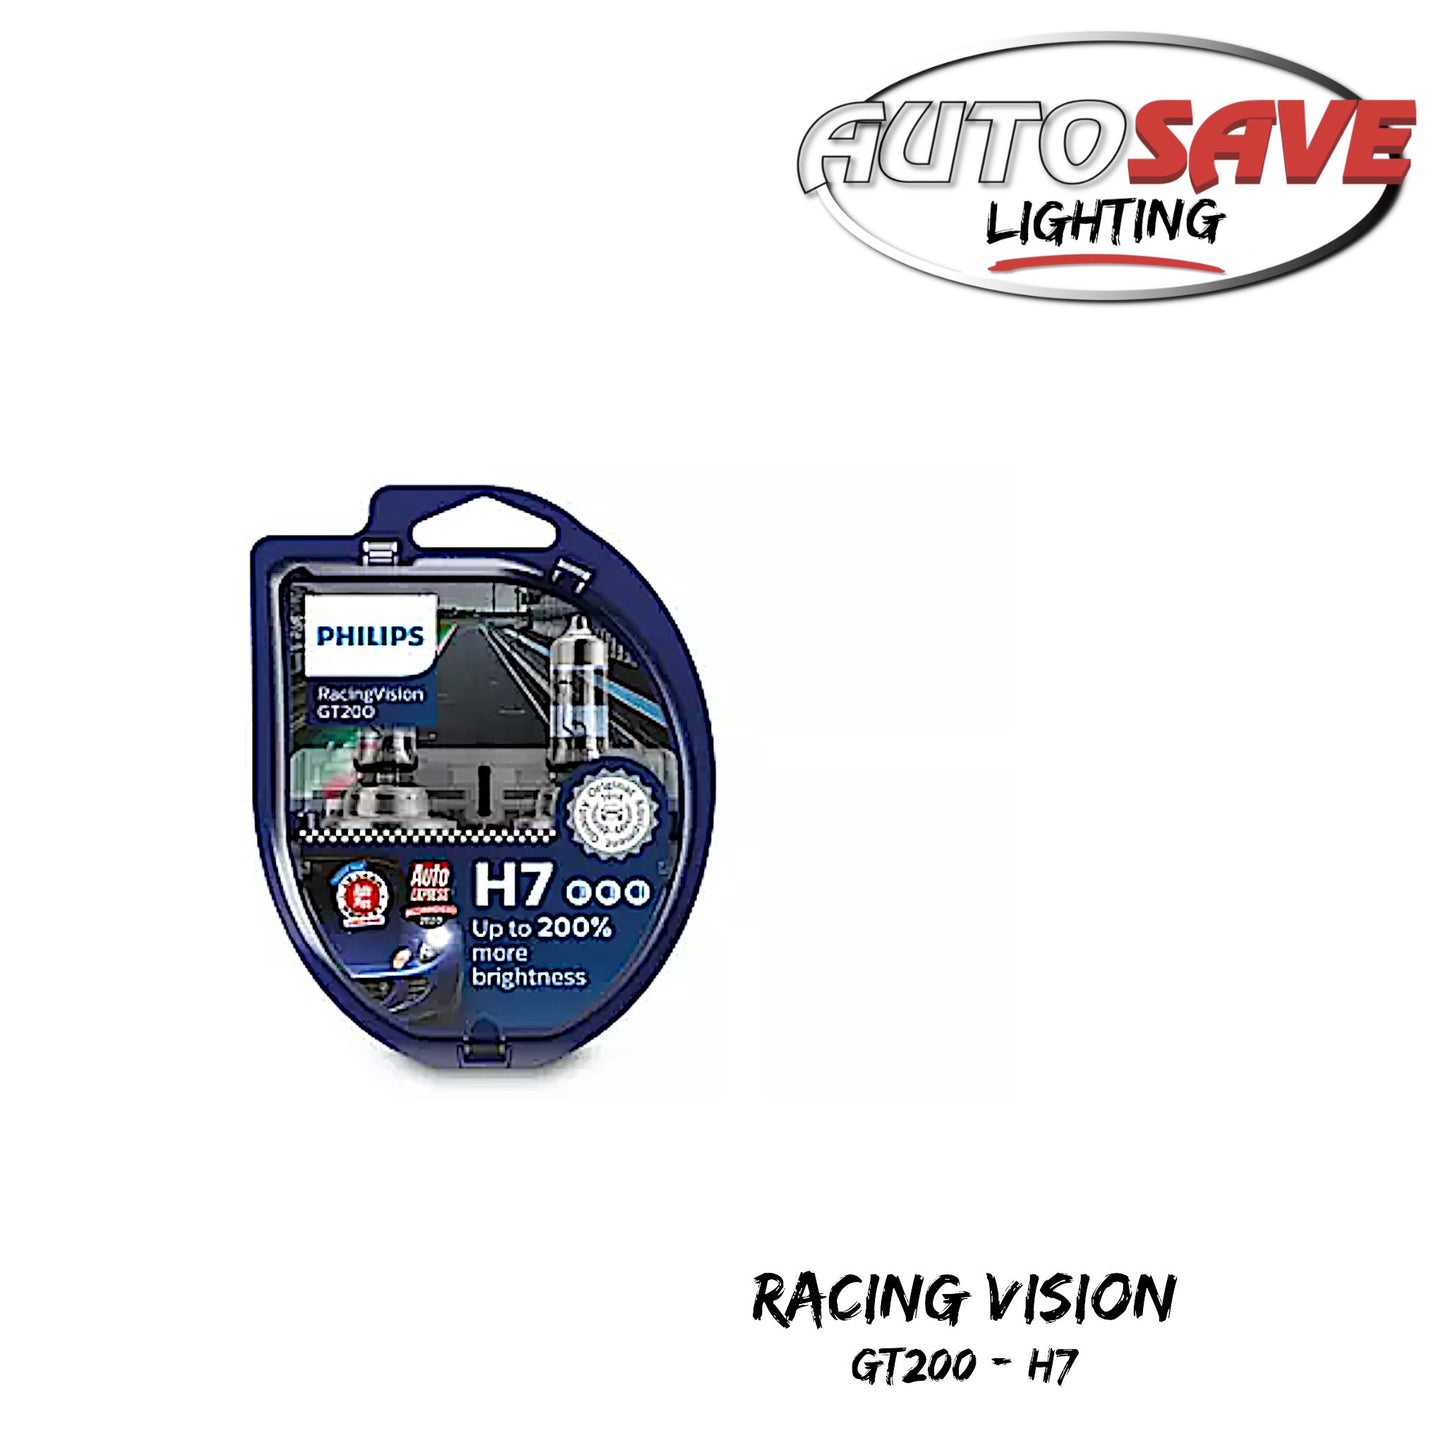 RacingVision GT200 - H7